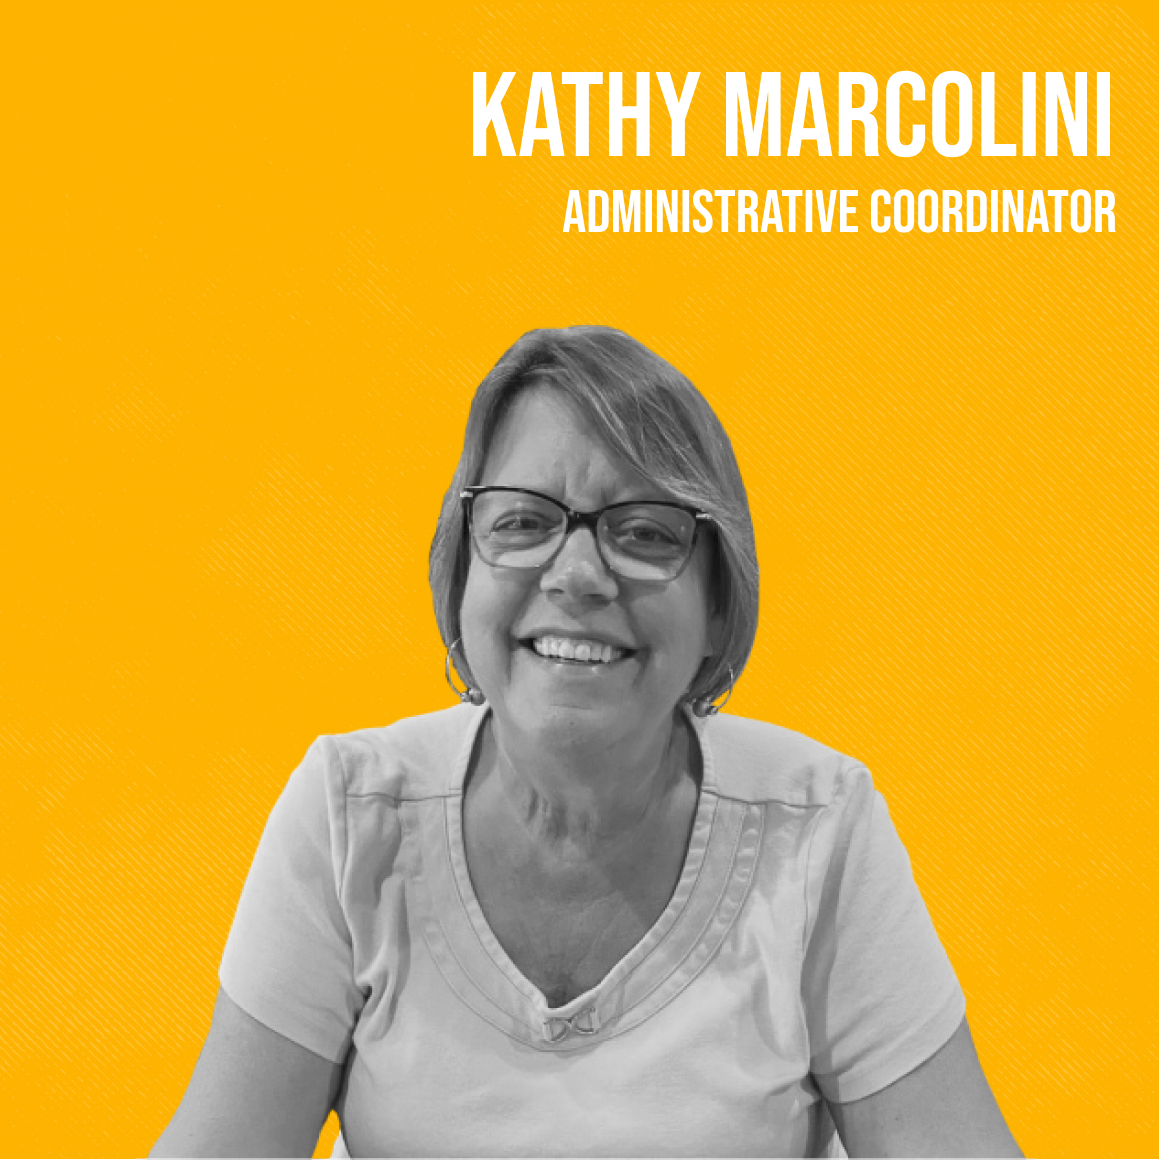 Kathy Marcolini